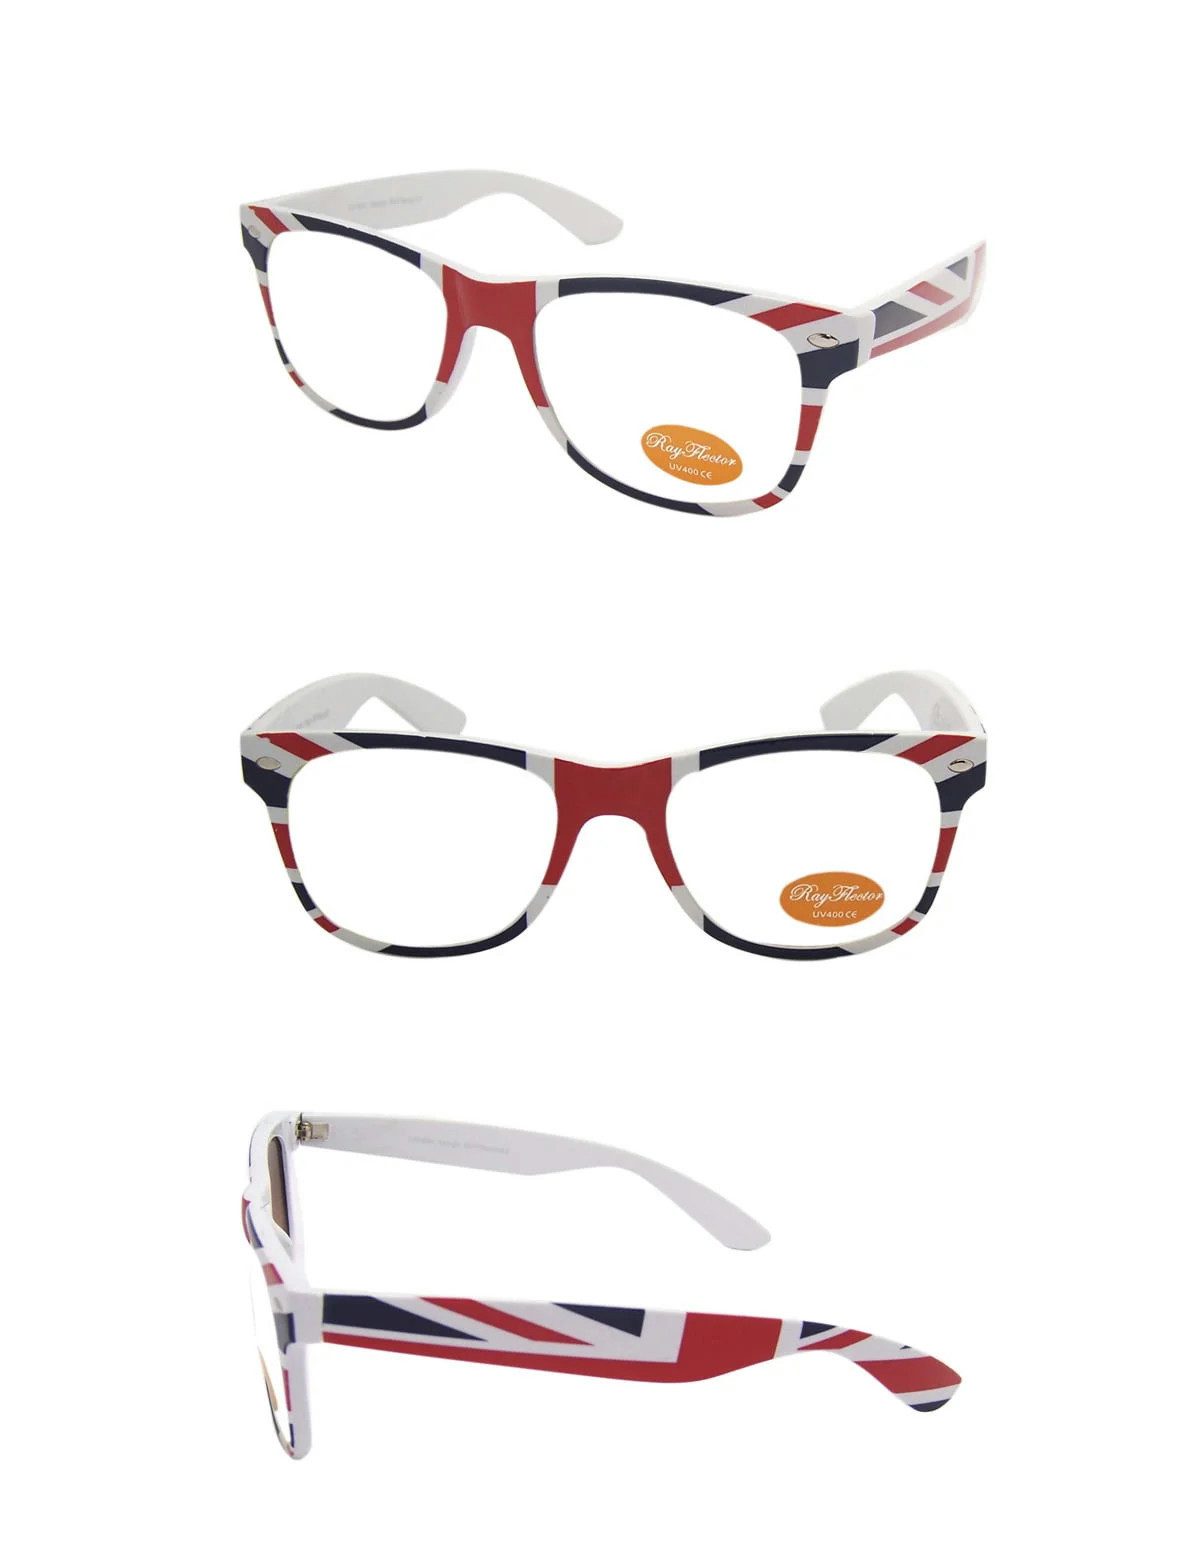 emeco Sonnenbrille Union Jack Britishe Flag Fahne sonnenbrille Brille Klar Gläser w2260